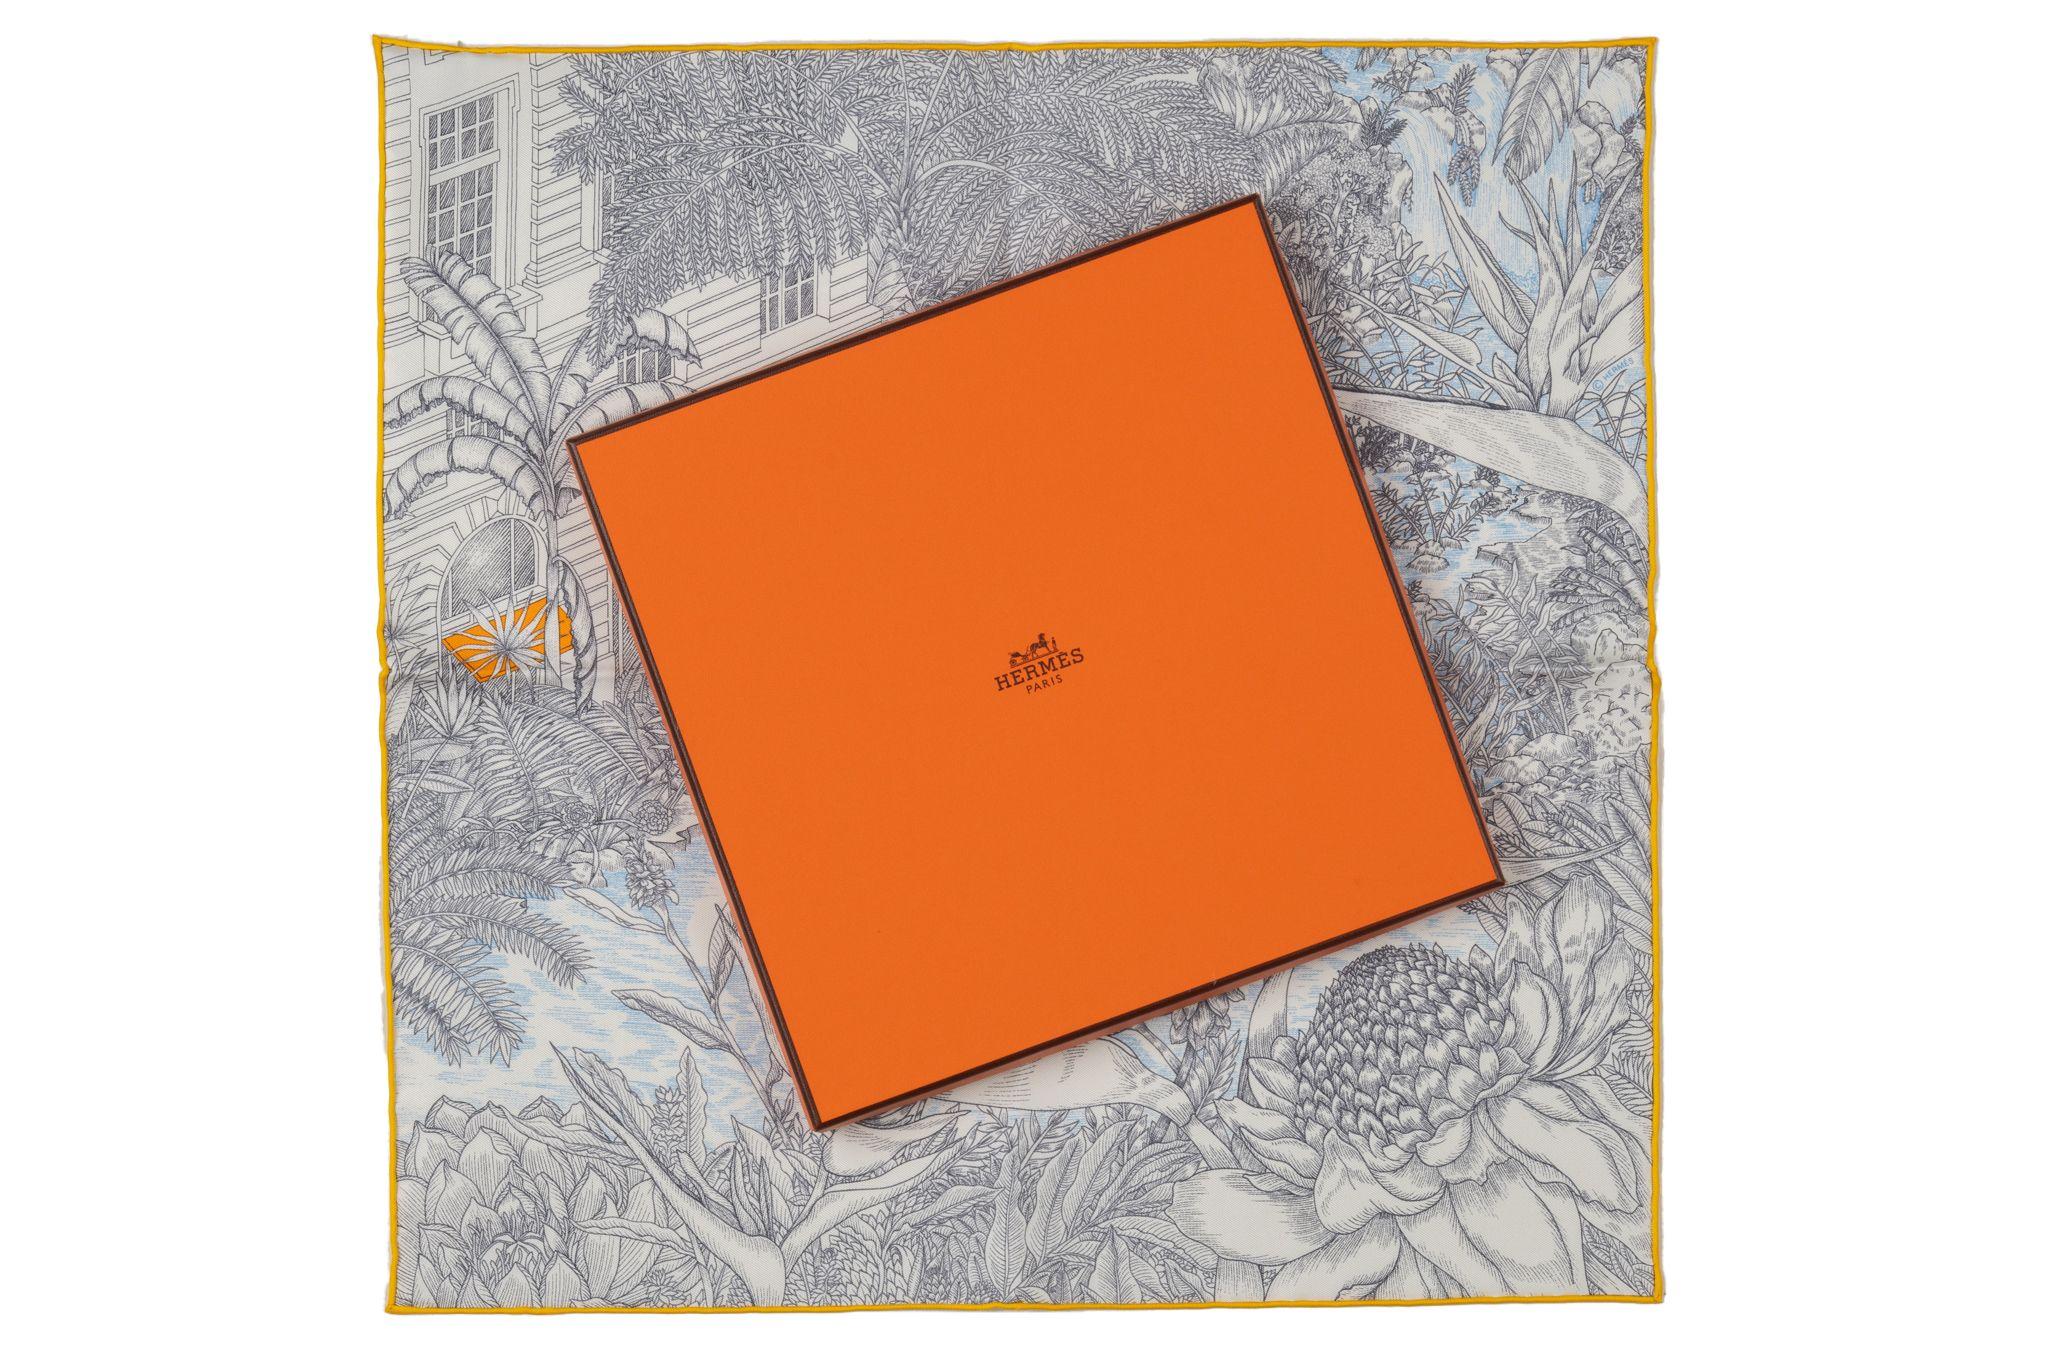 Hermès brand new in box tropical garden anthracite silk gavroche. Hand-rolled edges.